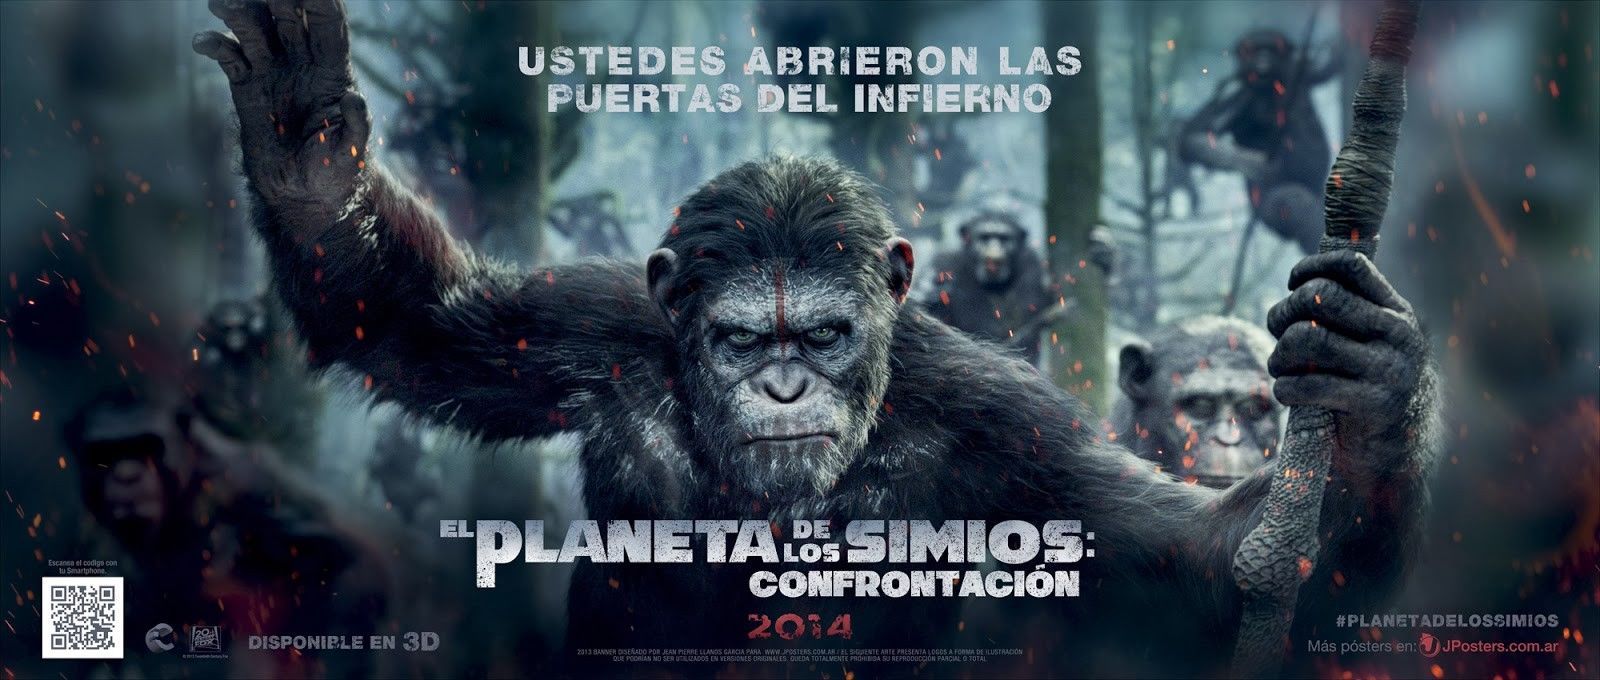 Планета обезьян: Революция